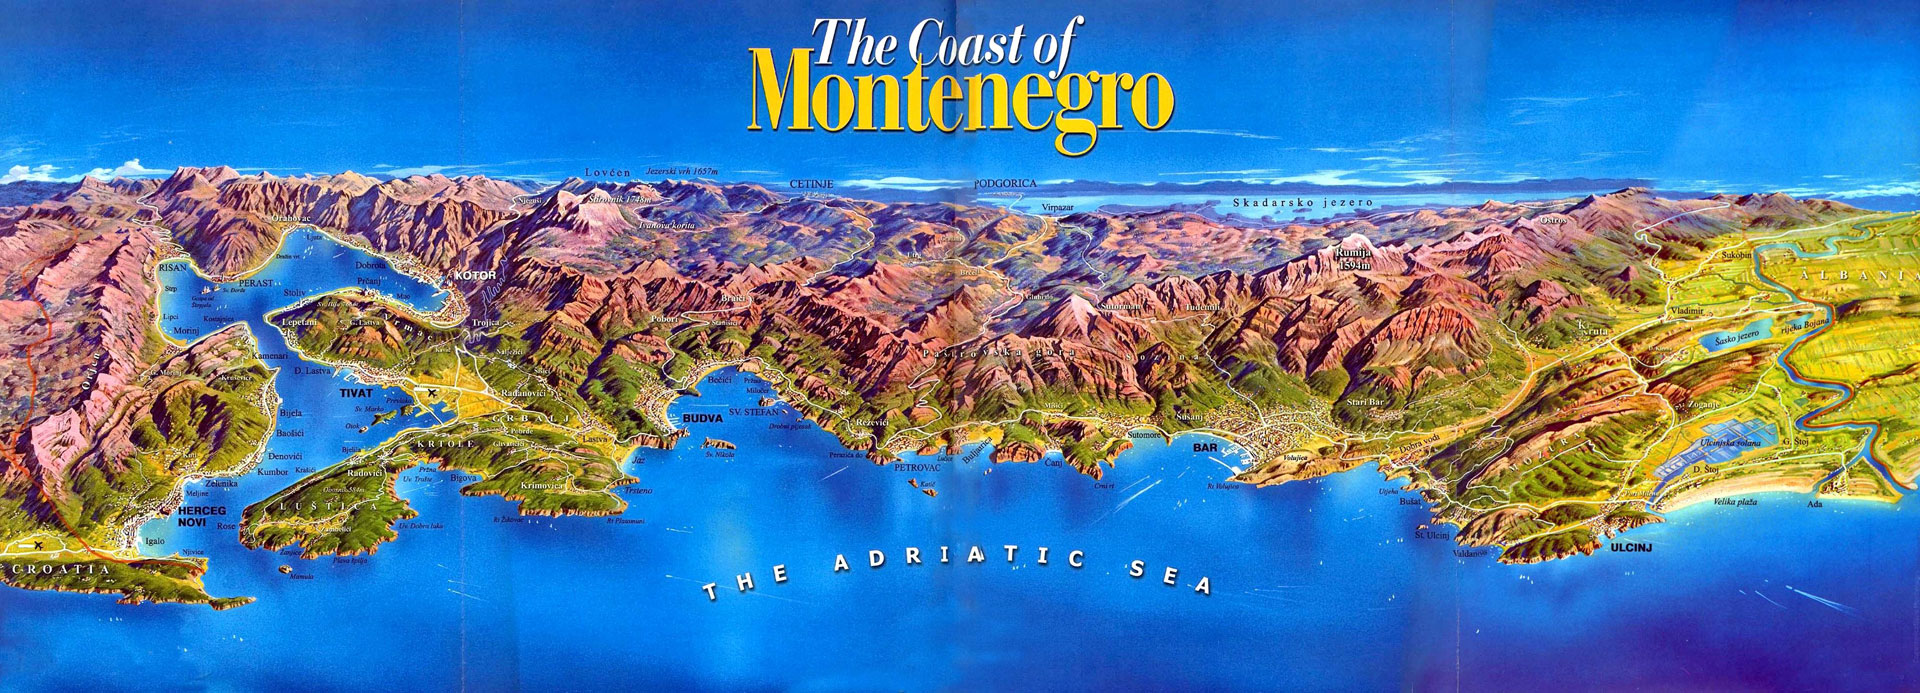 montenegrocoast_map